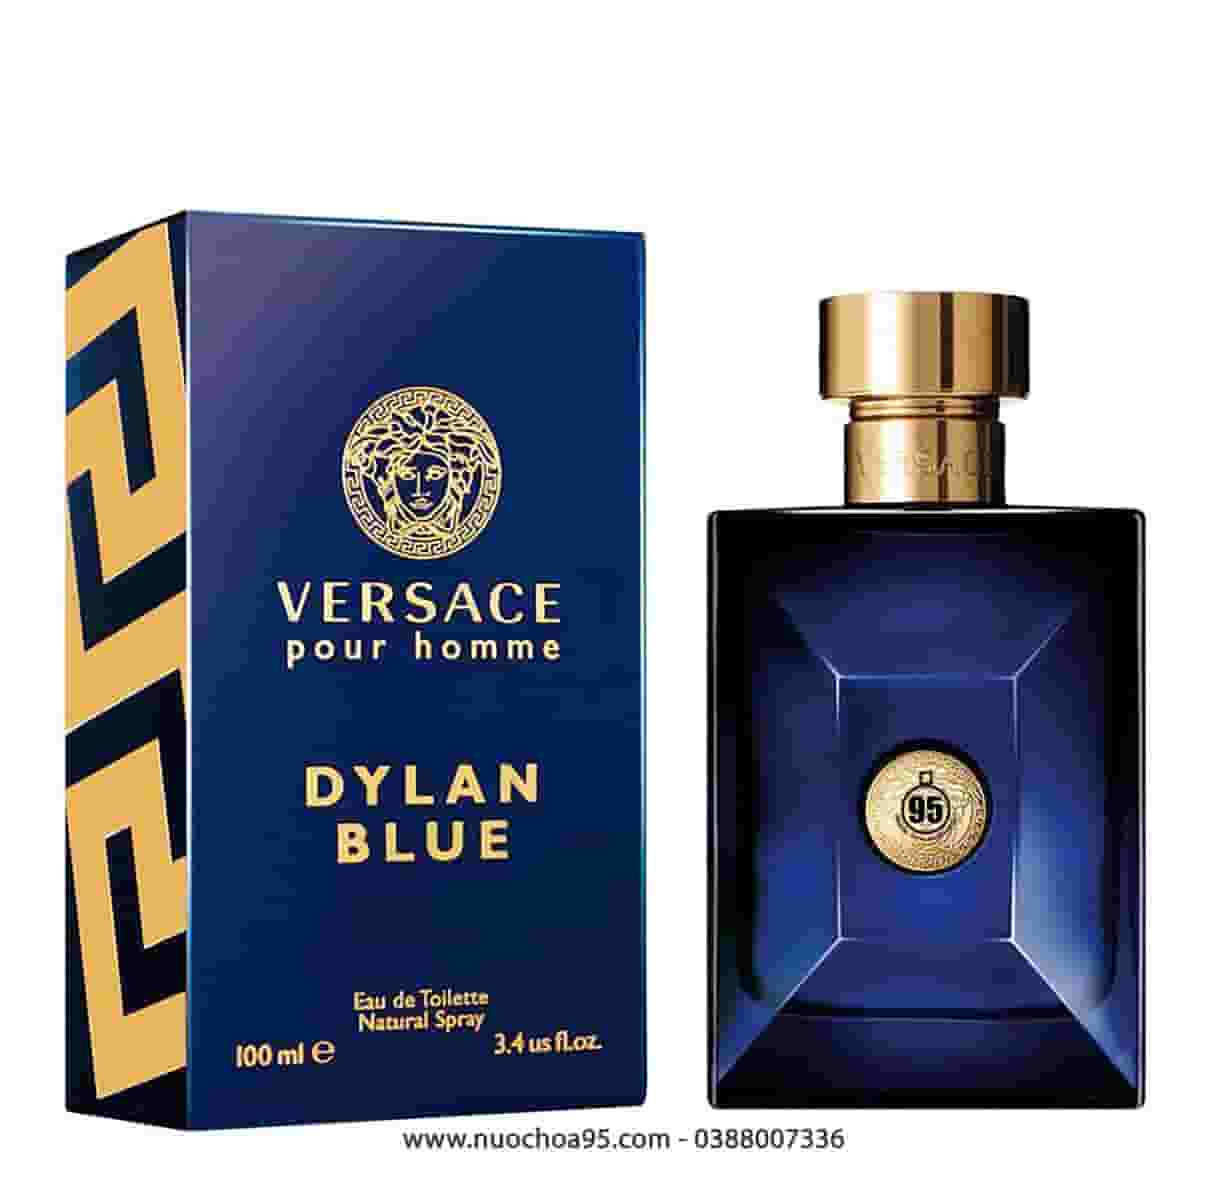 Nước hoa Versace Pour Homme Dylan Blue 